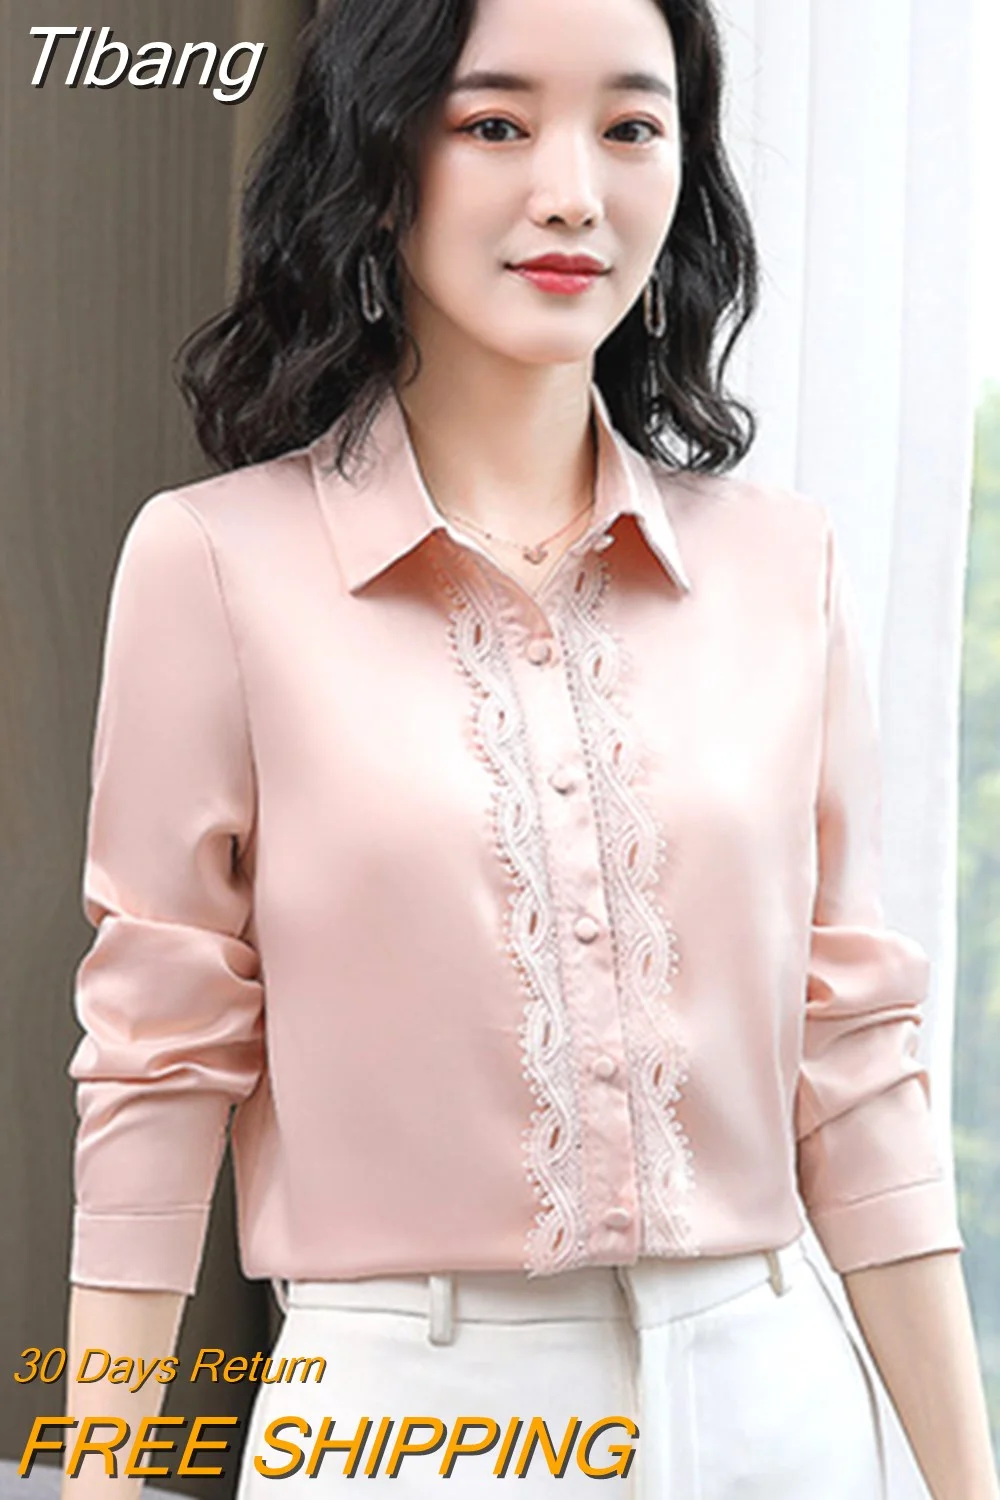 Tlbang Silk Shirts Women Embroidery Lace Shirt Woman Long Sleeves Blouses Women Satin Silk Shirts Womens Tops White Shirts Tops